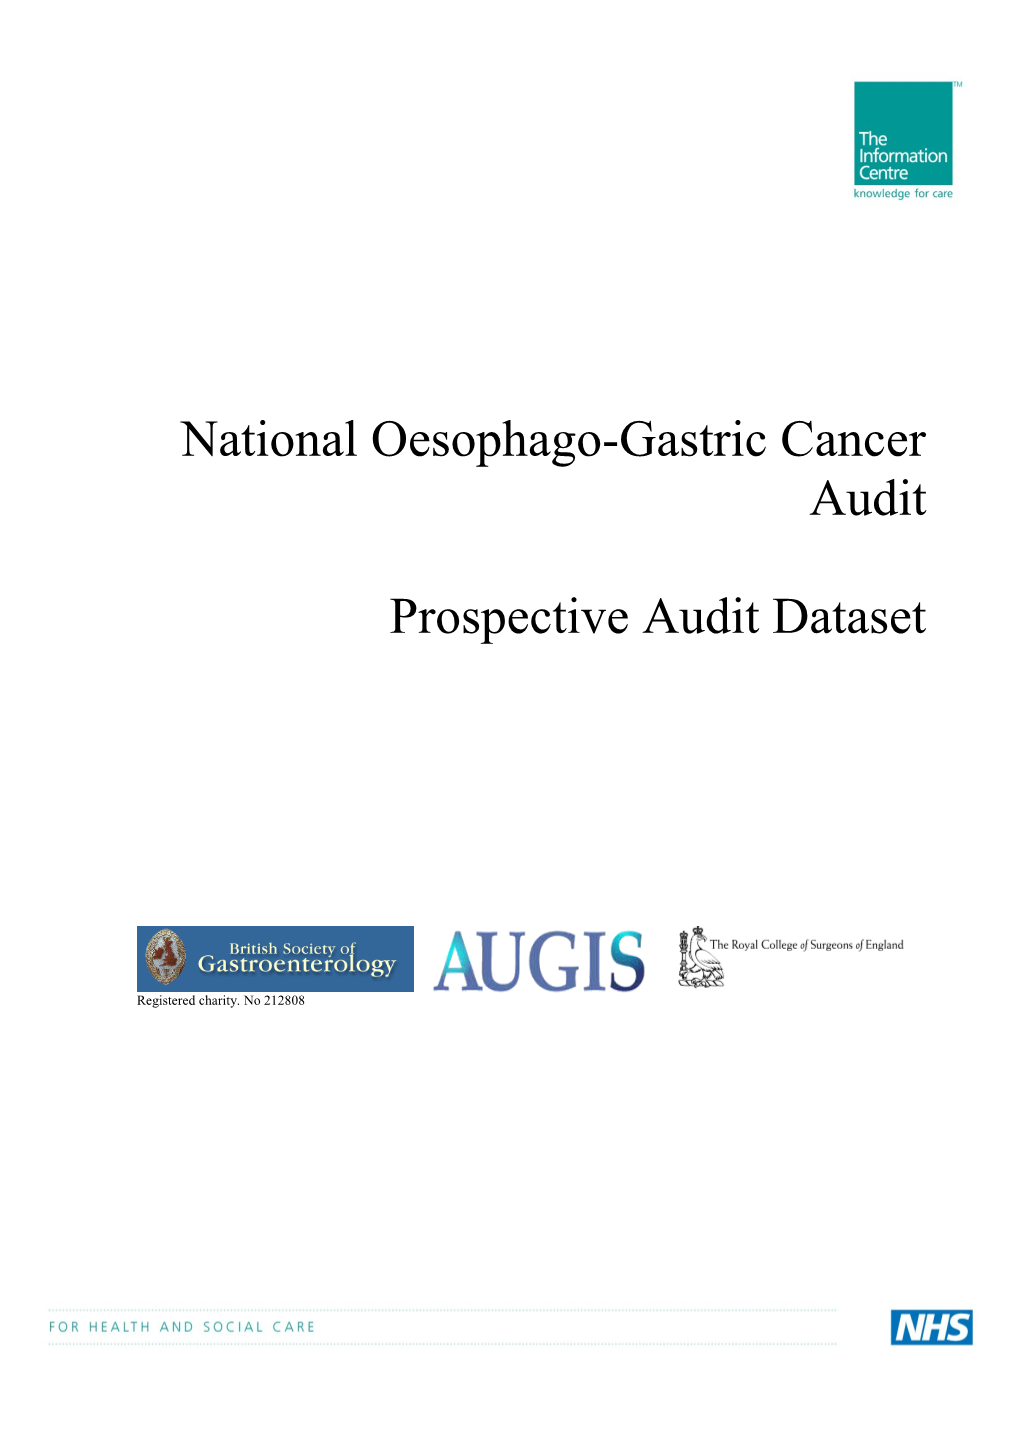 National Oesophago-Gastric Cancer Audit